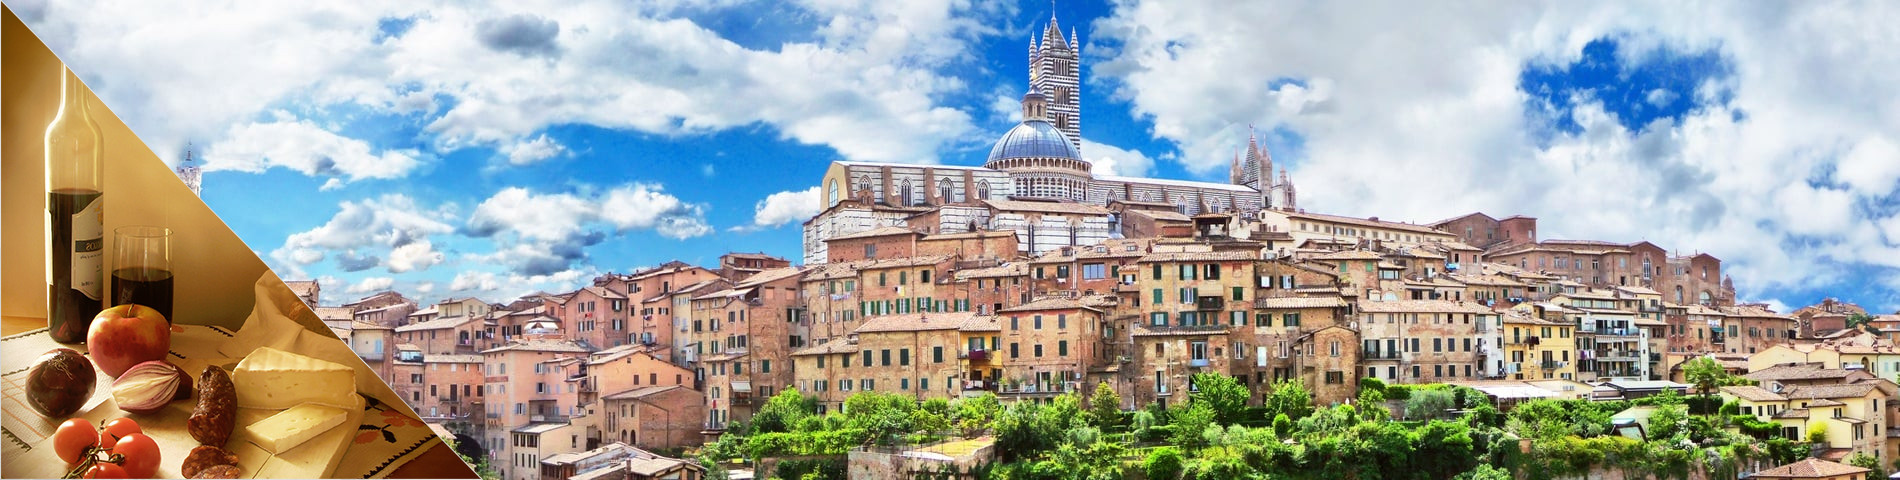 Siena - Italienisch & Kultur